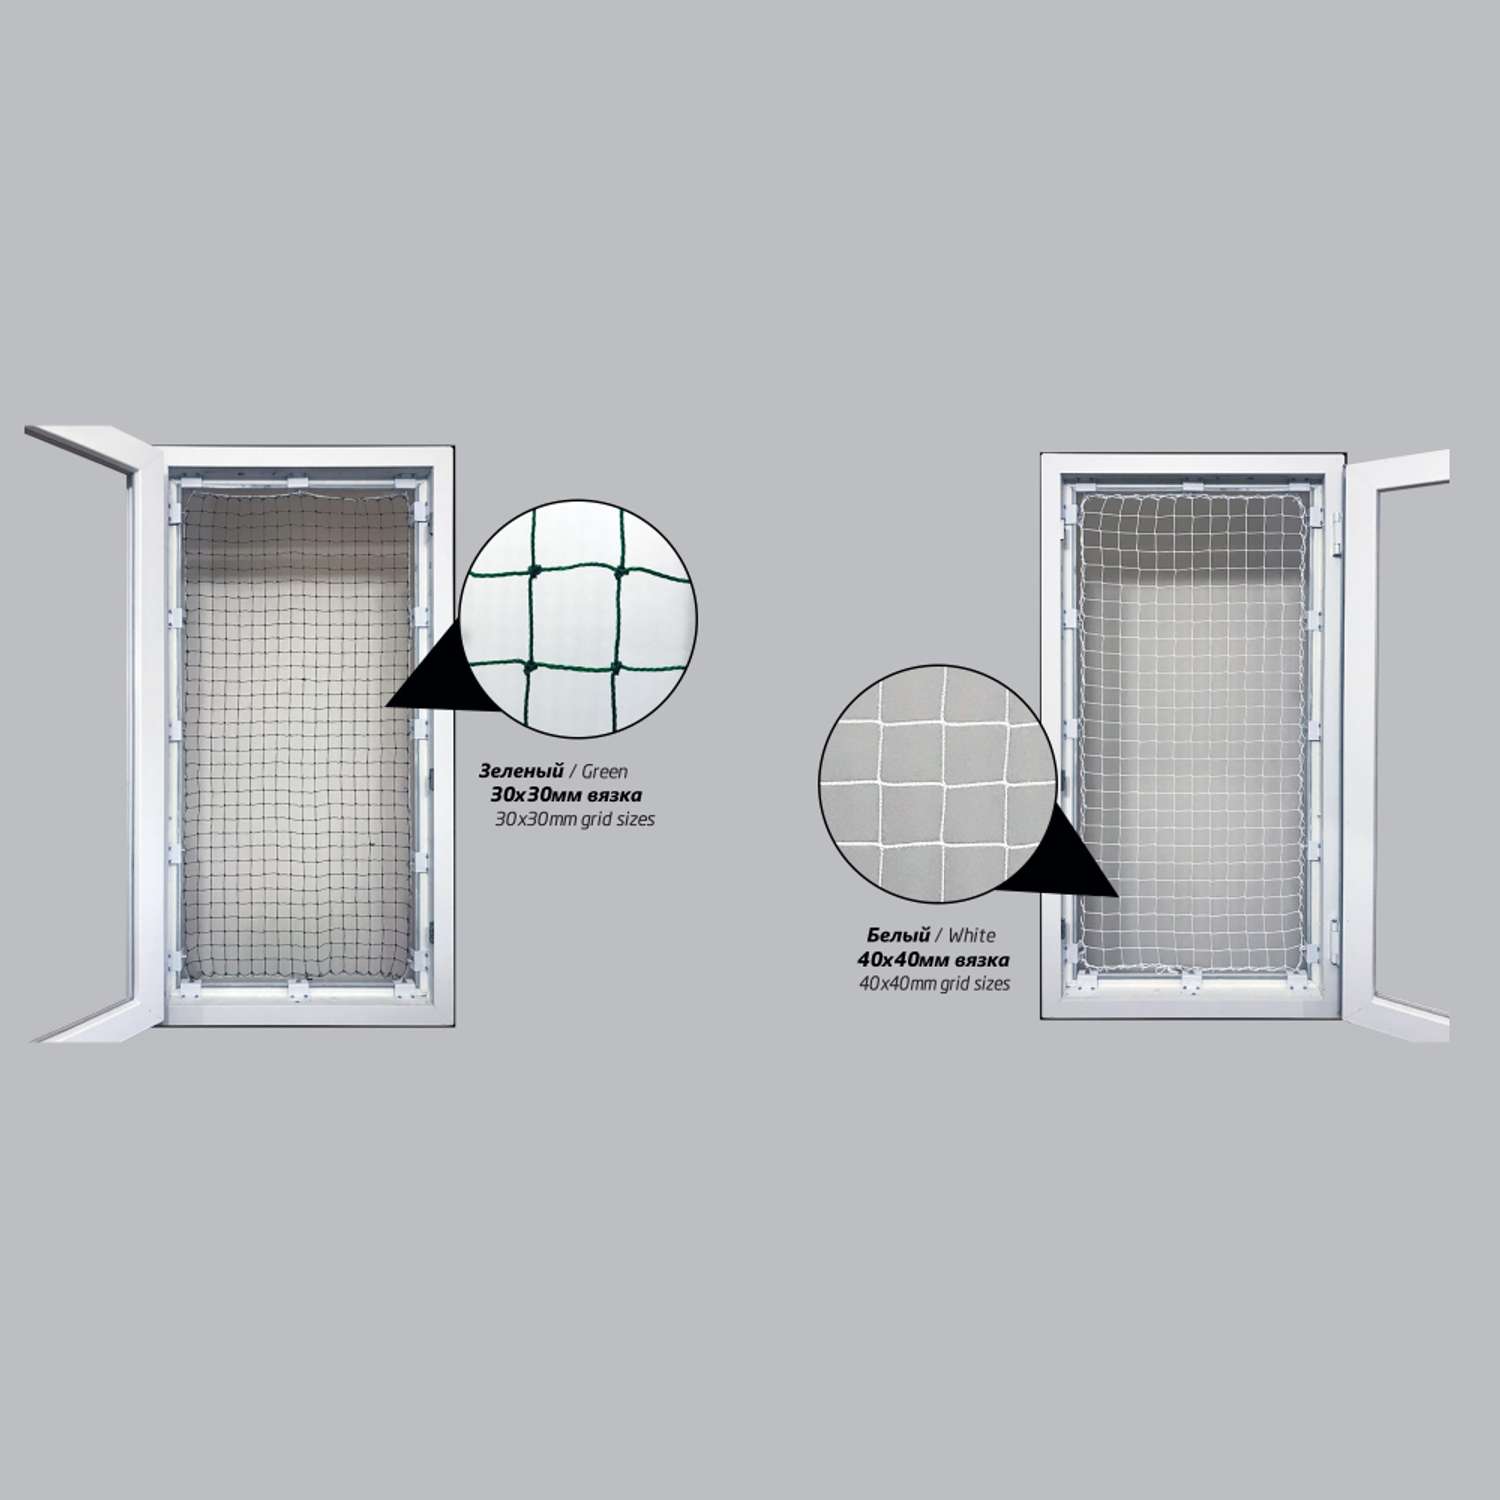 Защитная сетка WINBLOCK на окна для кошек Pets 80х140см коричневый кронштейн - фото 4